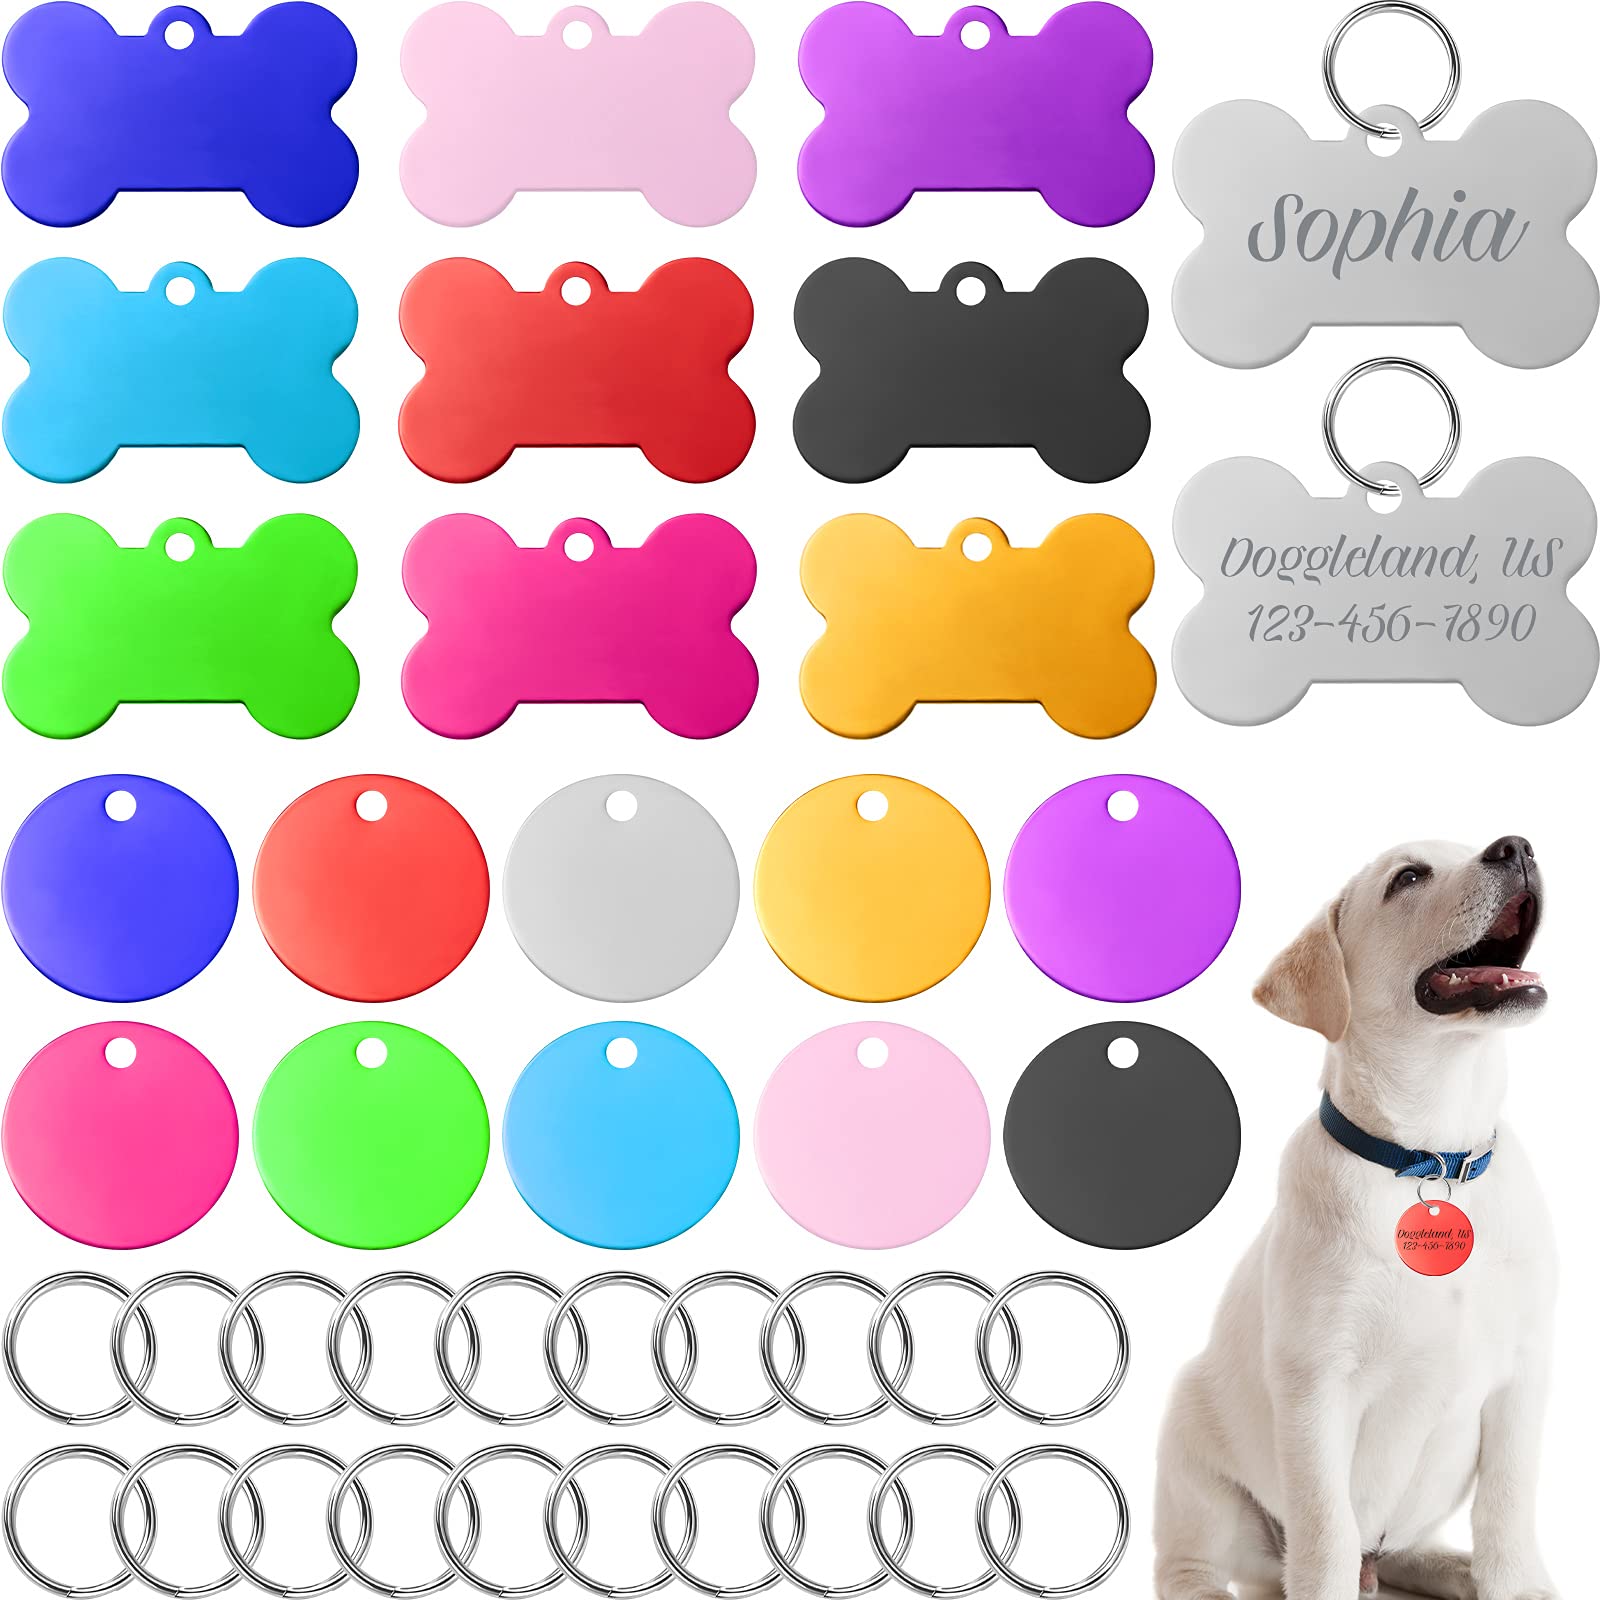 Color Printed Dog Tags